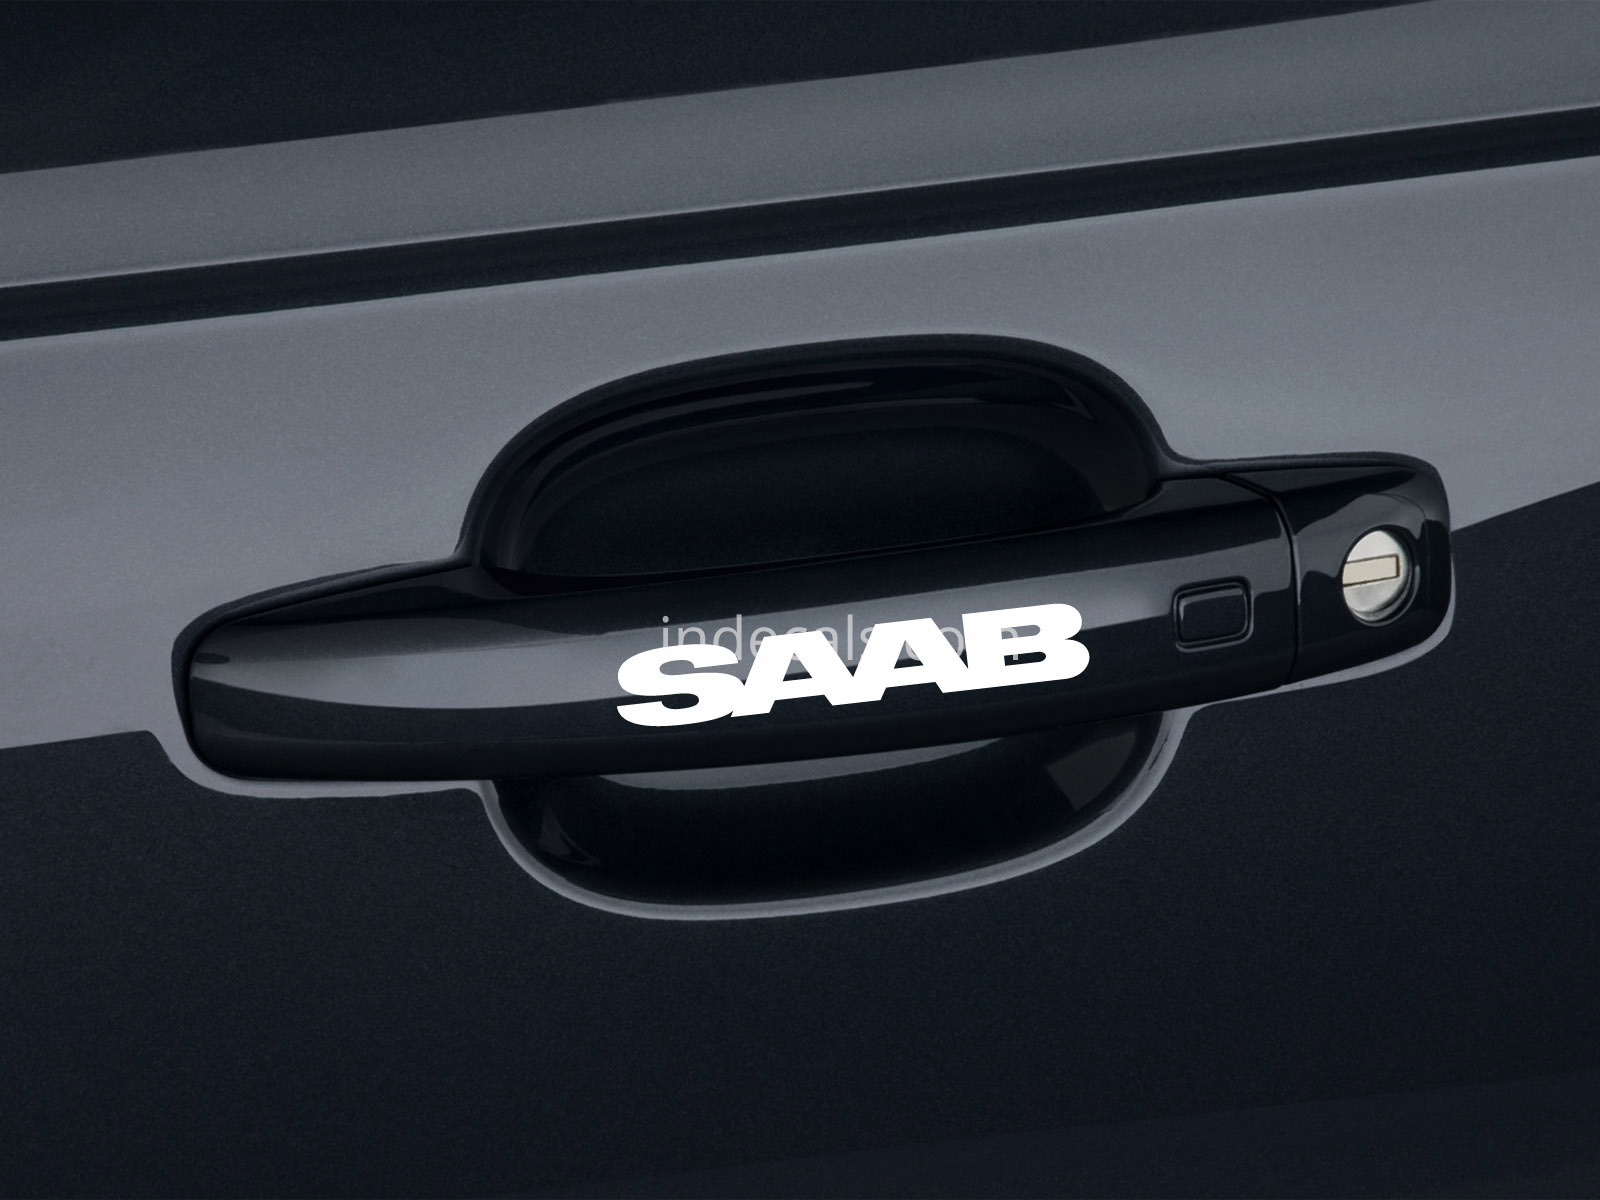 6 x Saab Stickers for Door Handles - White